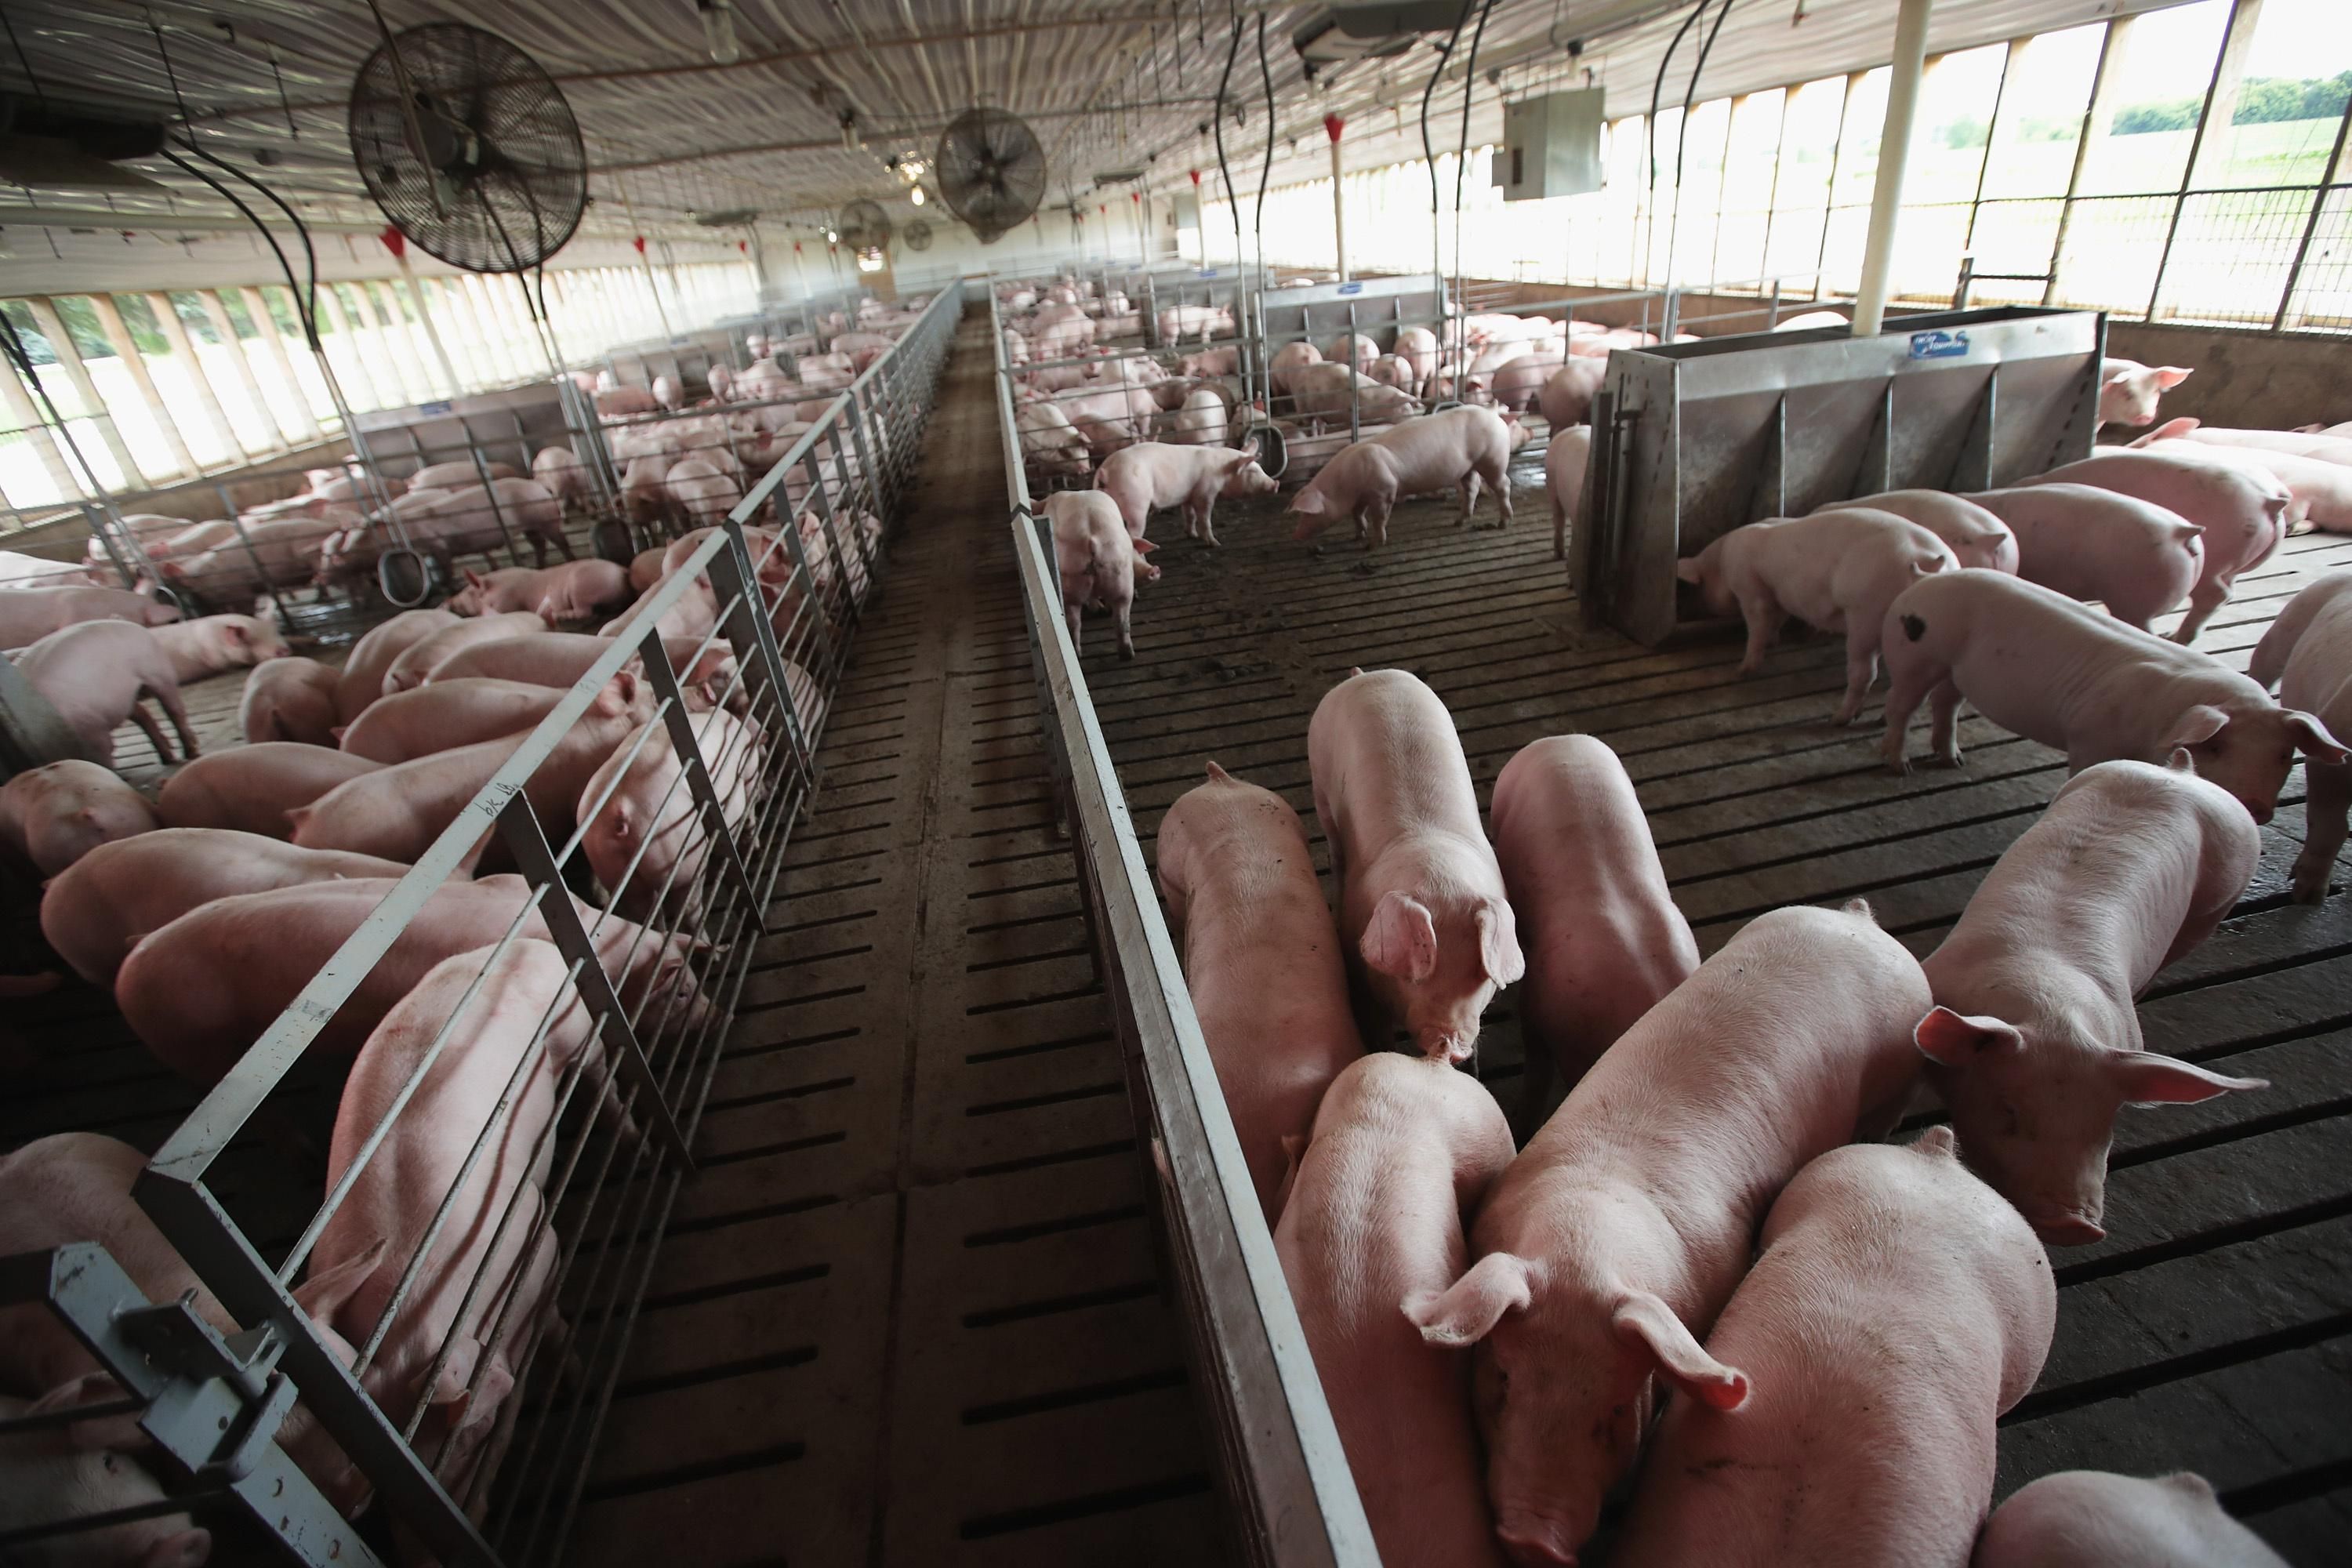 Hogs are raised on Duncan Farms on June 6, 2018 near Polo, Illinois. (Photo: Scott Olson via Getty Images)